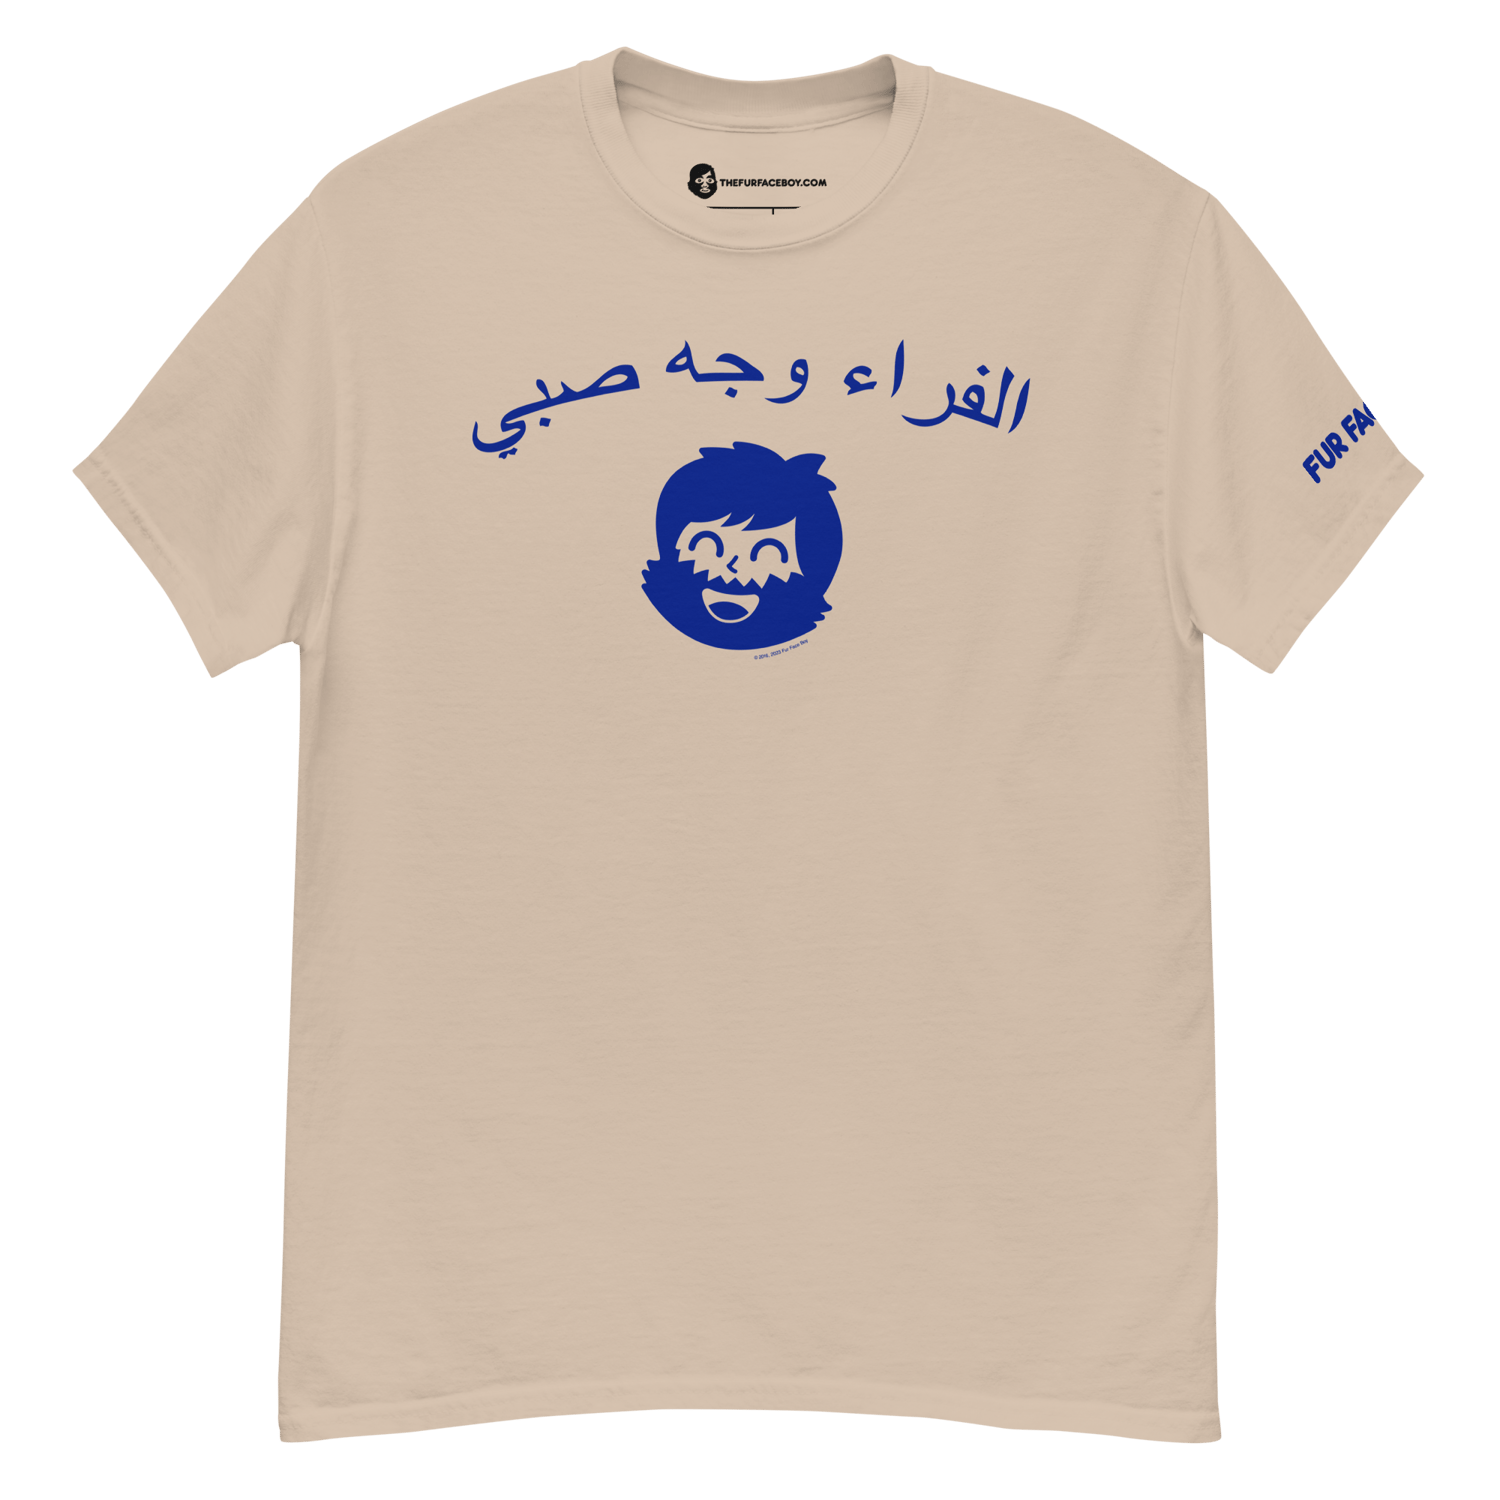 FFB Arabic Tee